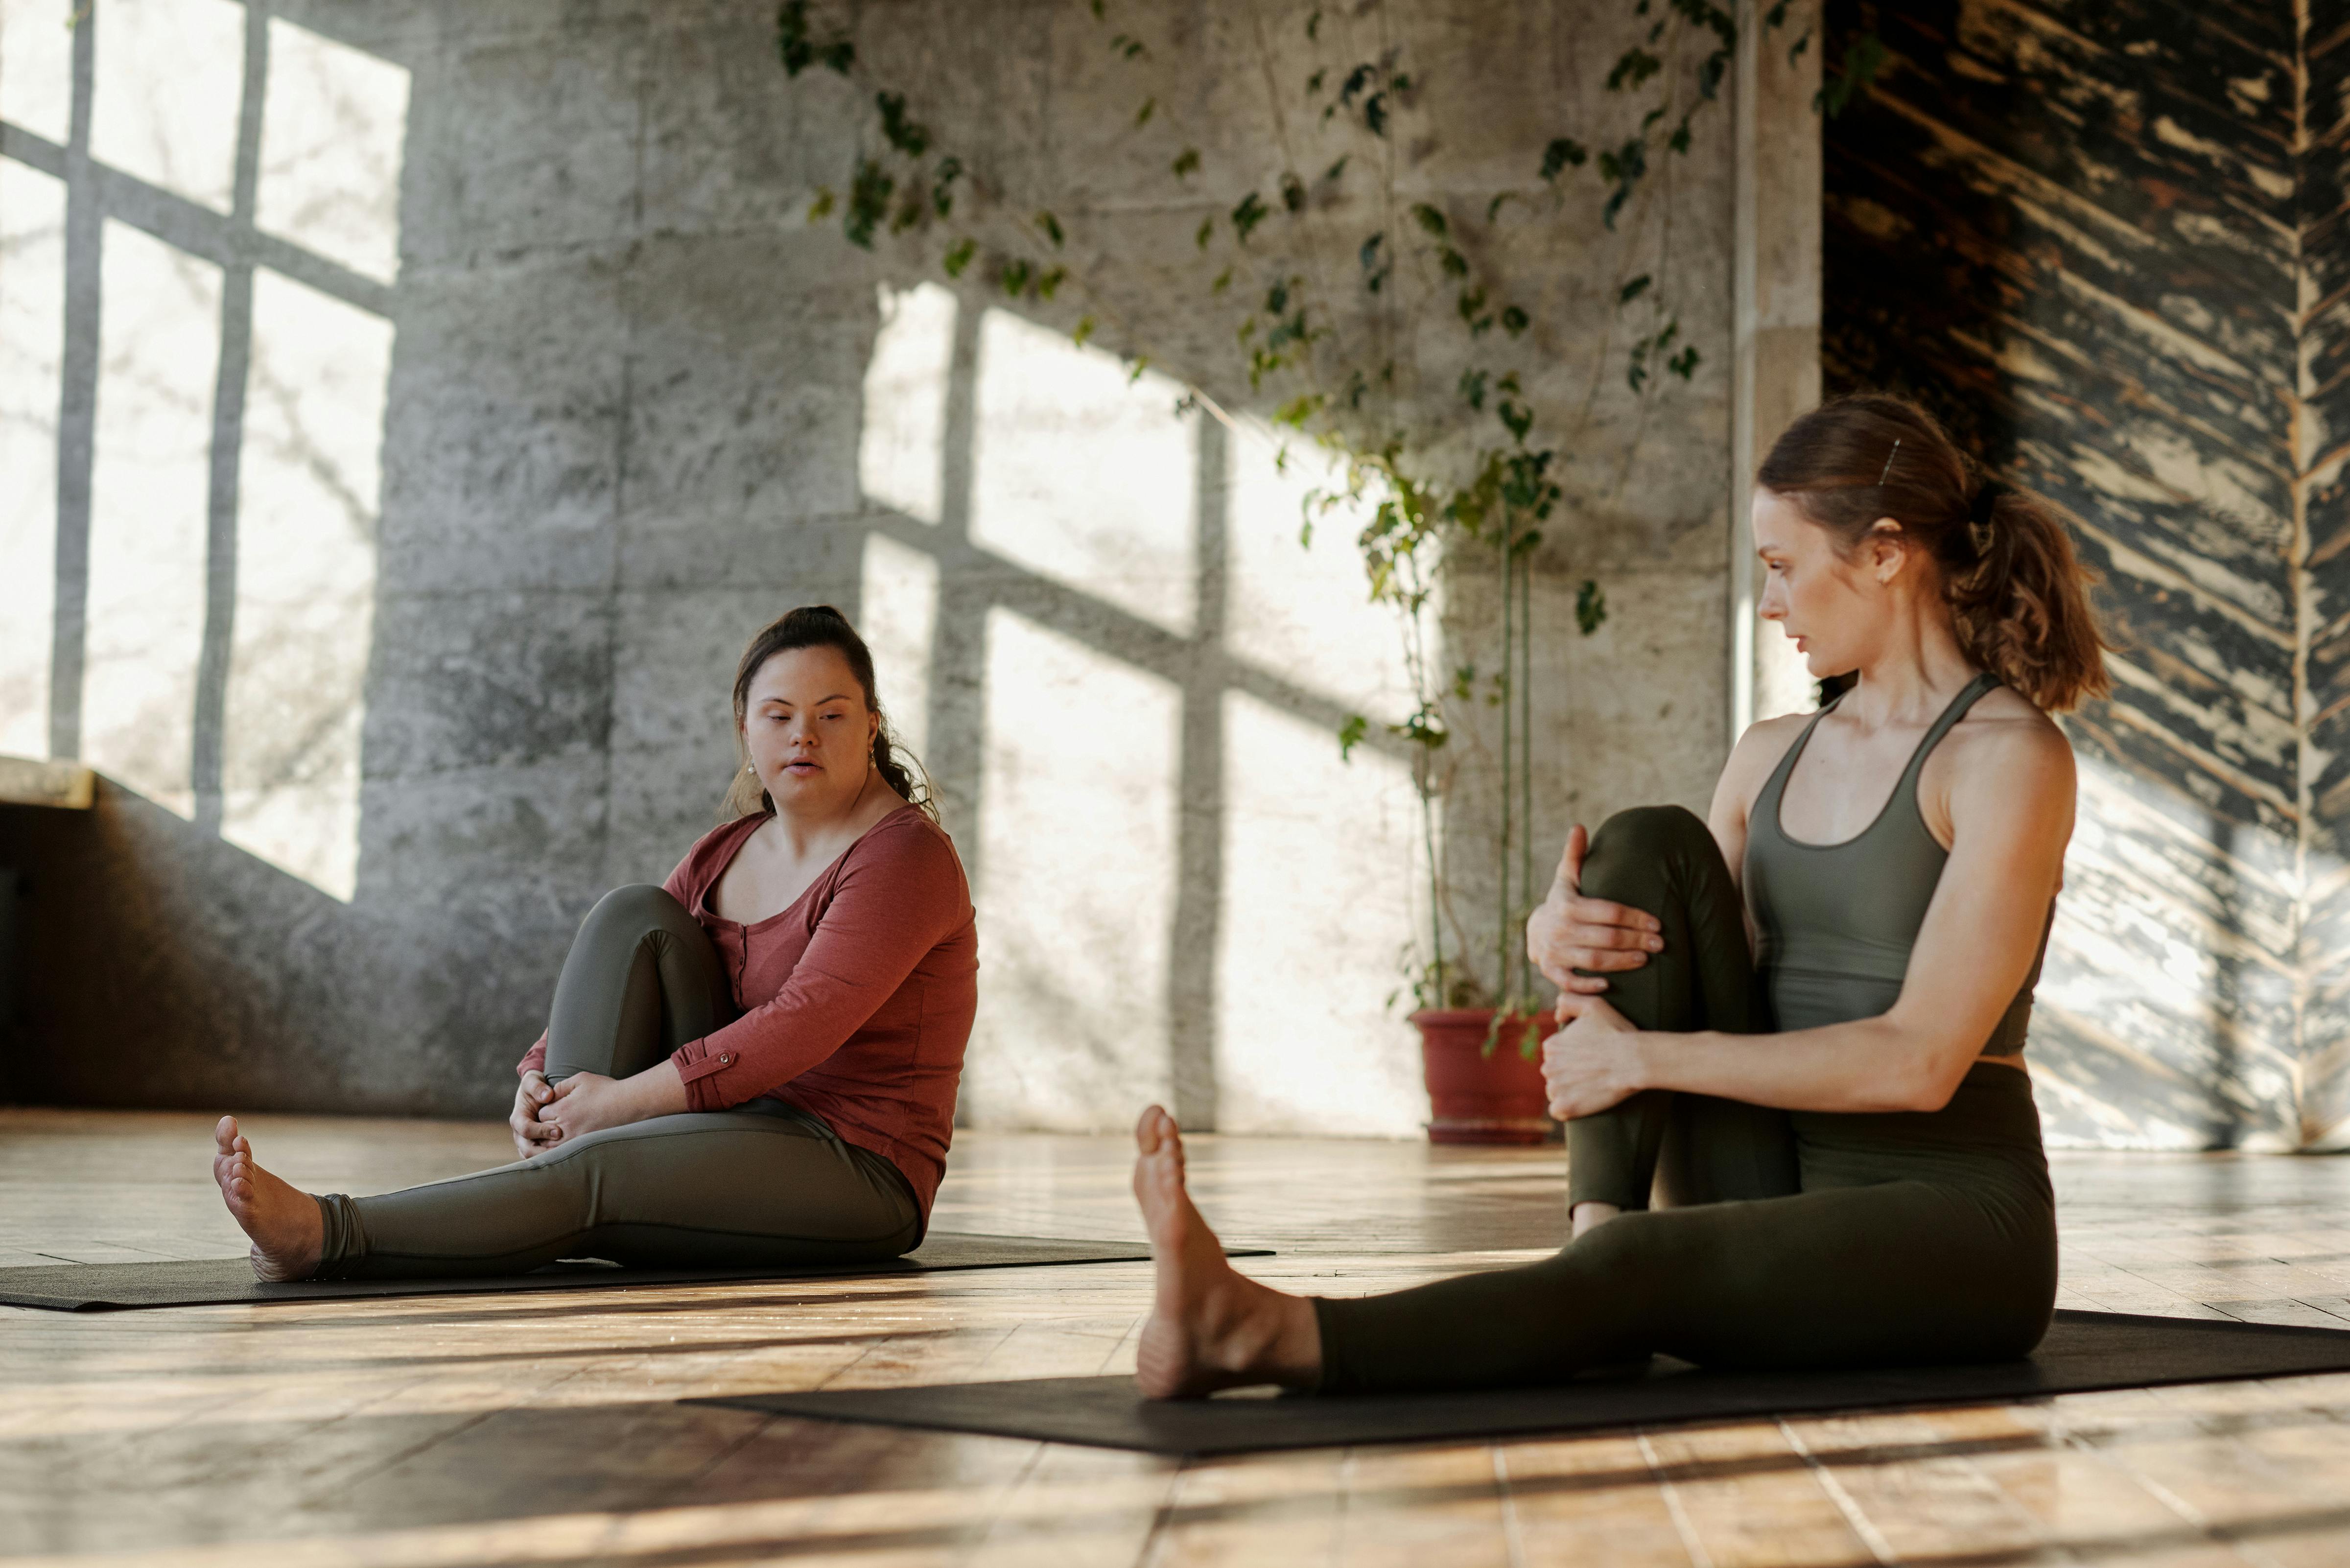 Discover Wellness & Balance with ChadTourisms Yoga Escapes